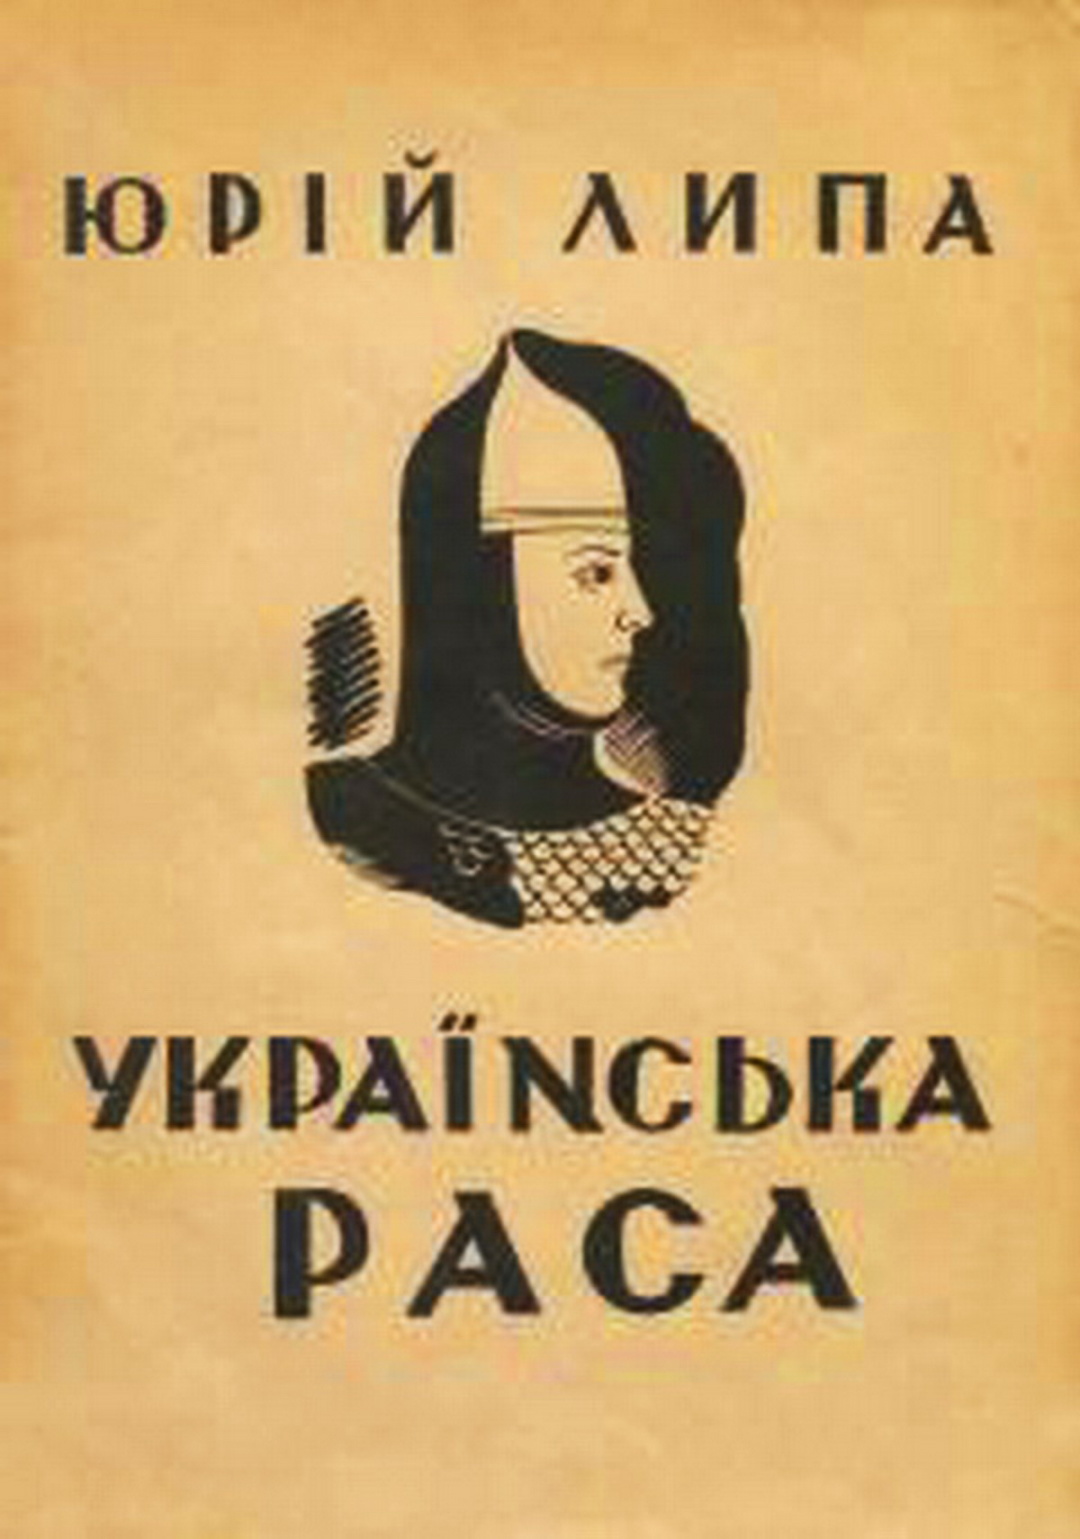 обкладинка брошури “Українська раса”, 1936 р.